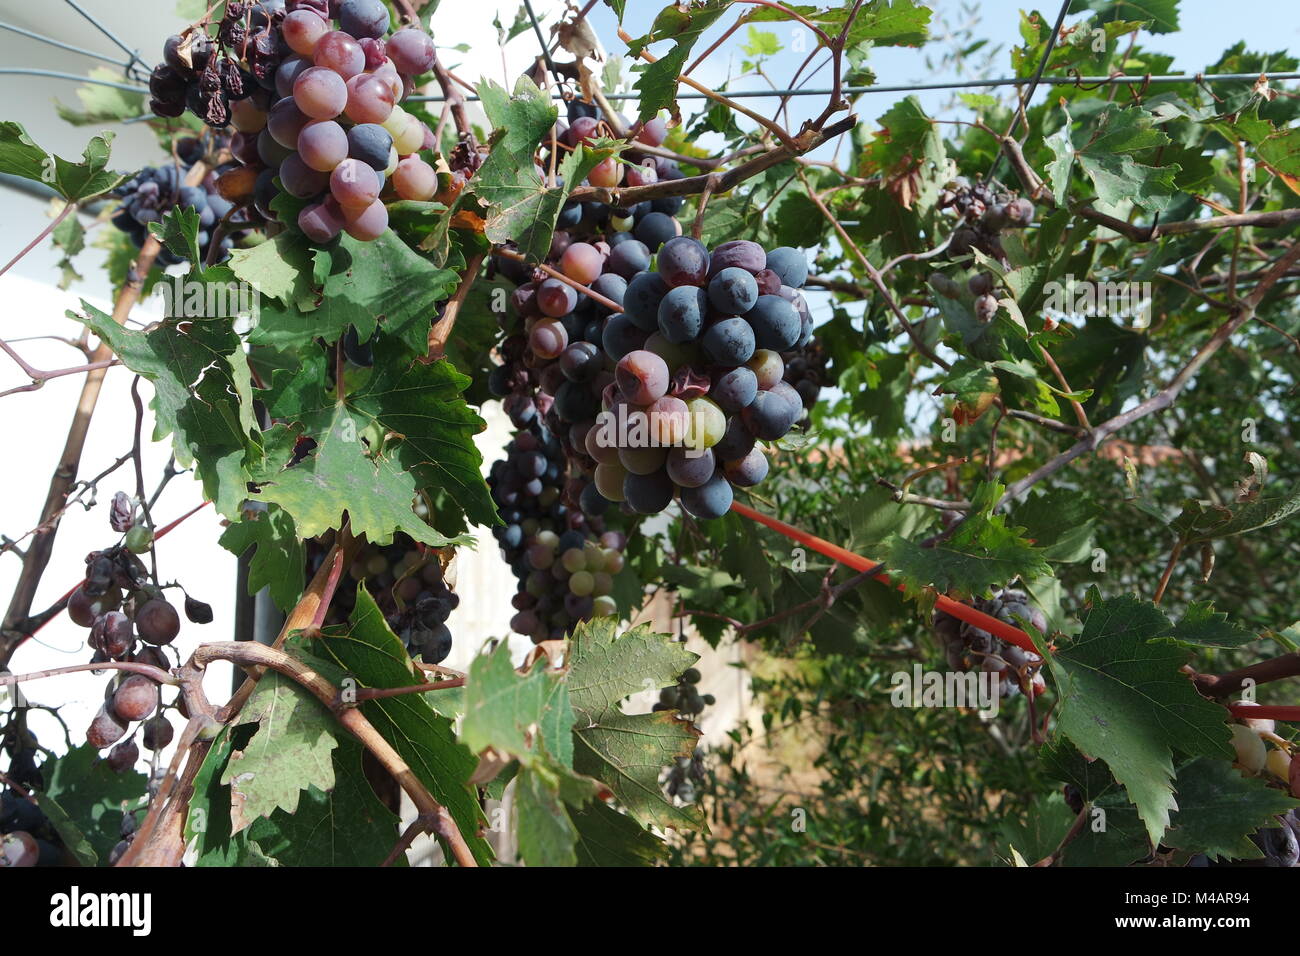 Overripe grapes Stock Photo